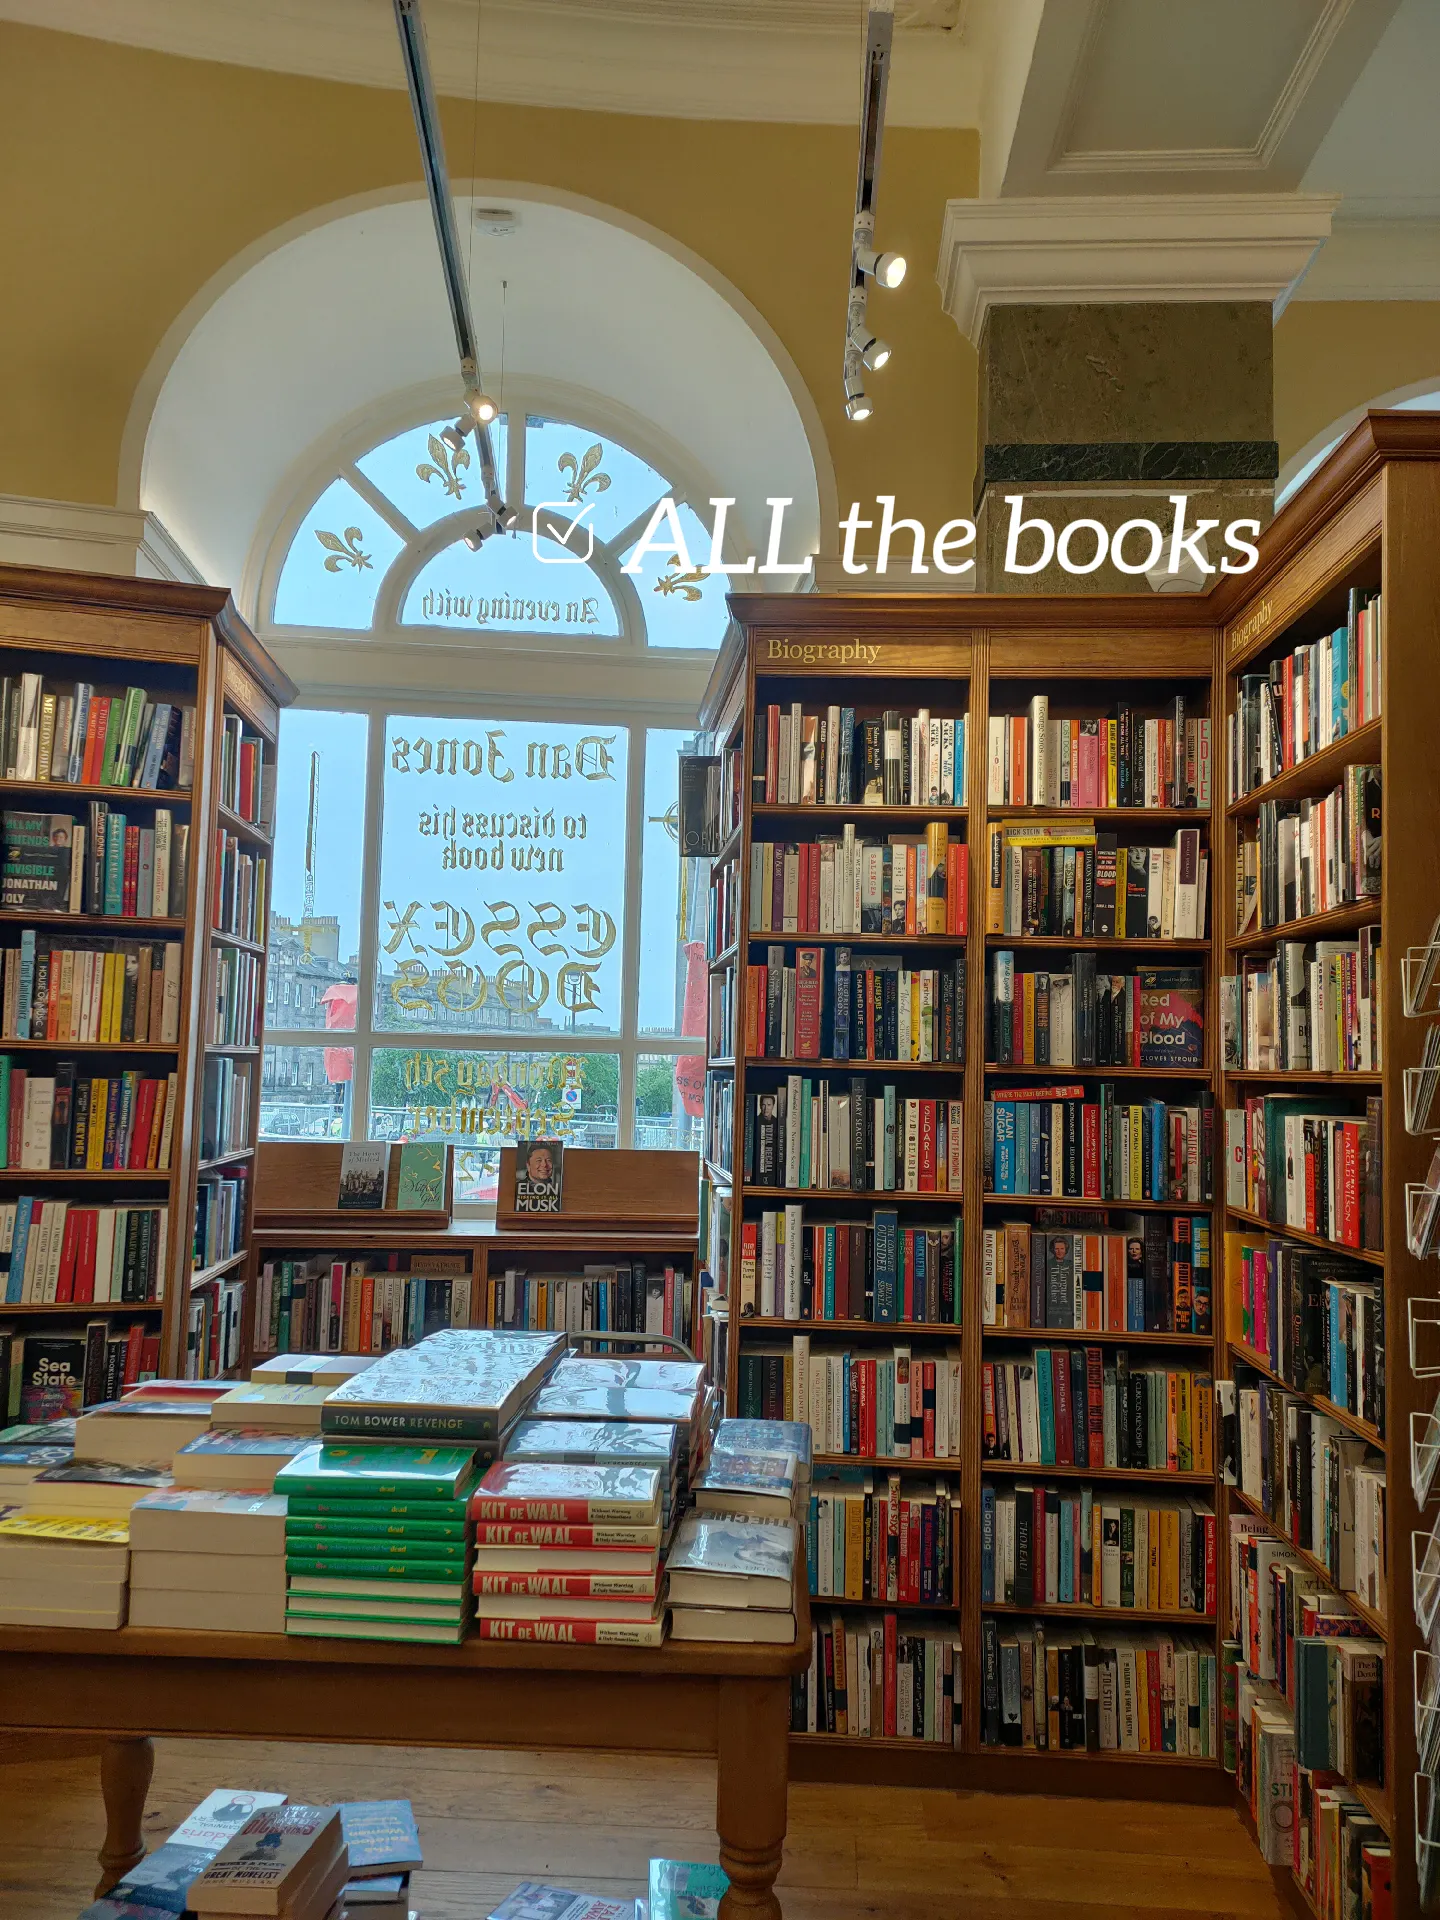 TJ Klune  Edinburgh - Topping & Company Booksellers of Bath